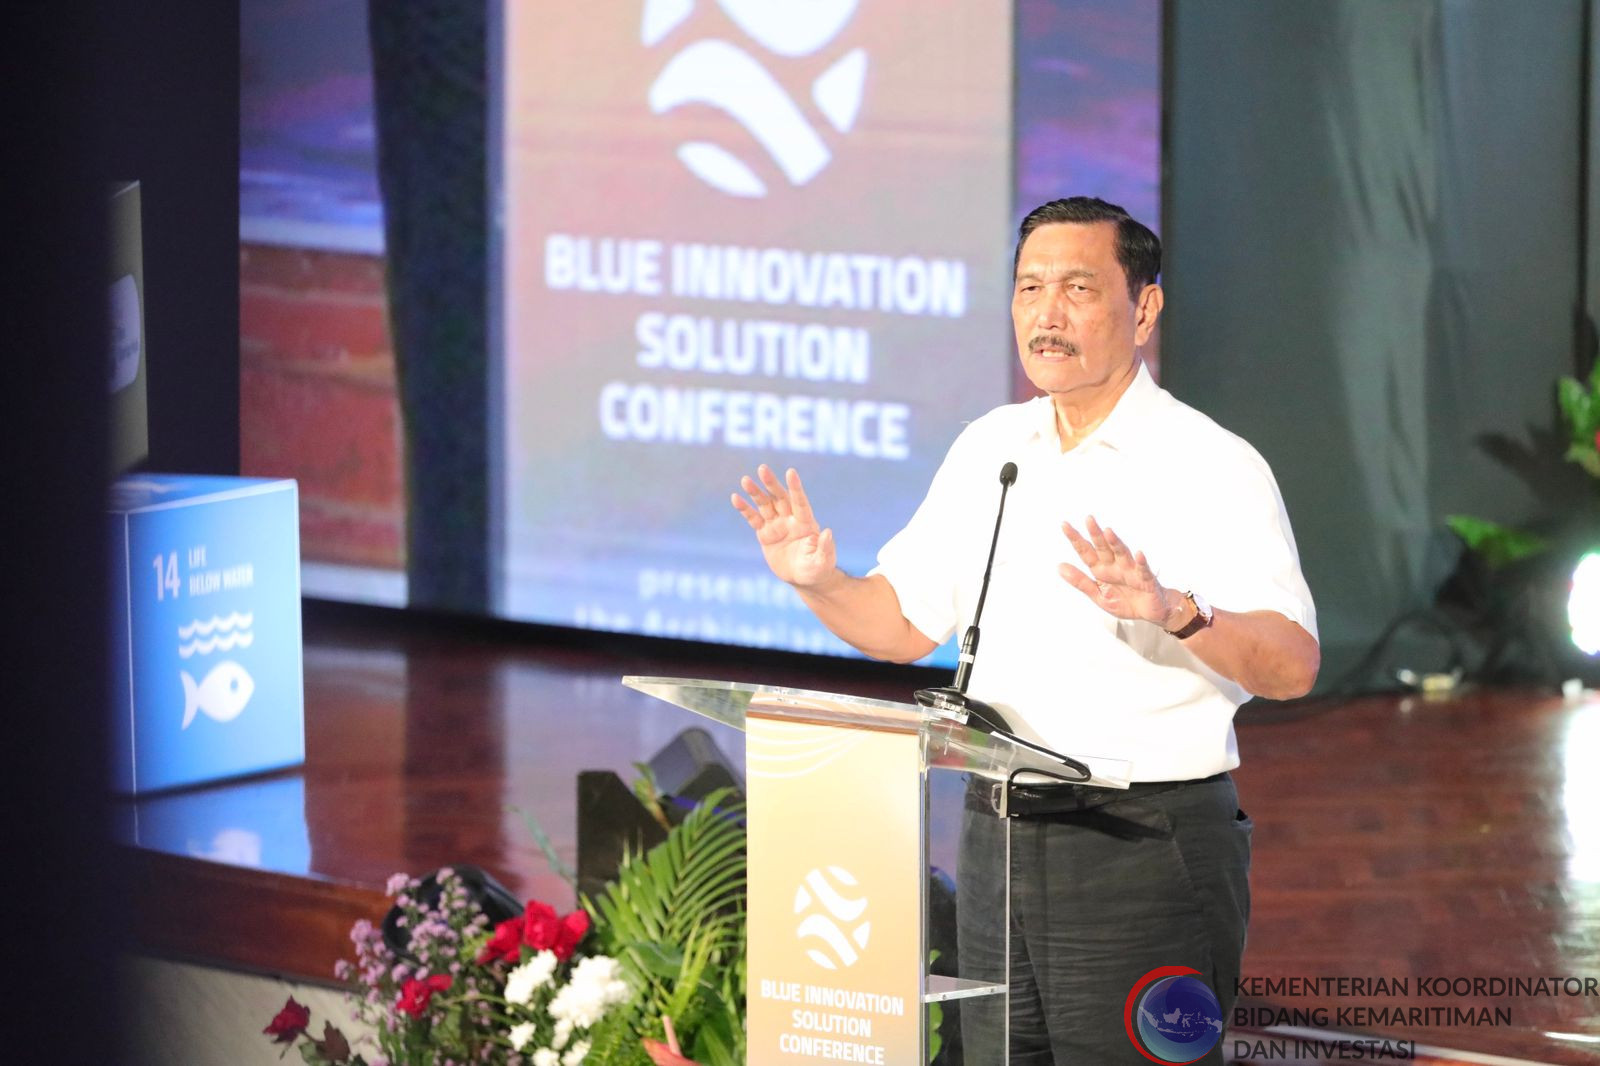 Membuka Blue Innovation Solution Conference Menko Luhut Tekankan Pentingnya Kerja Sama Ekonomi Biru, Perubahan Iklim dan Berkelanjutan